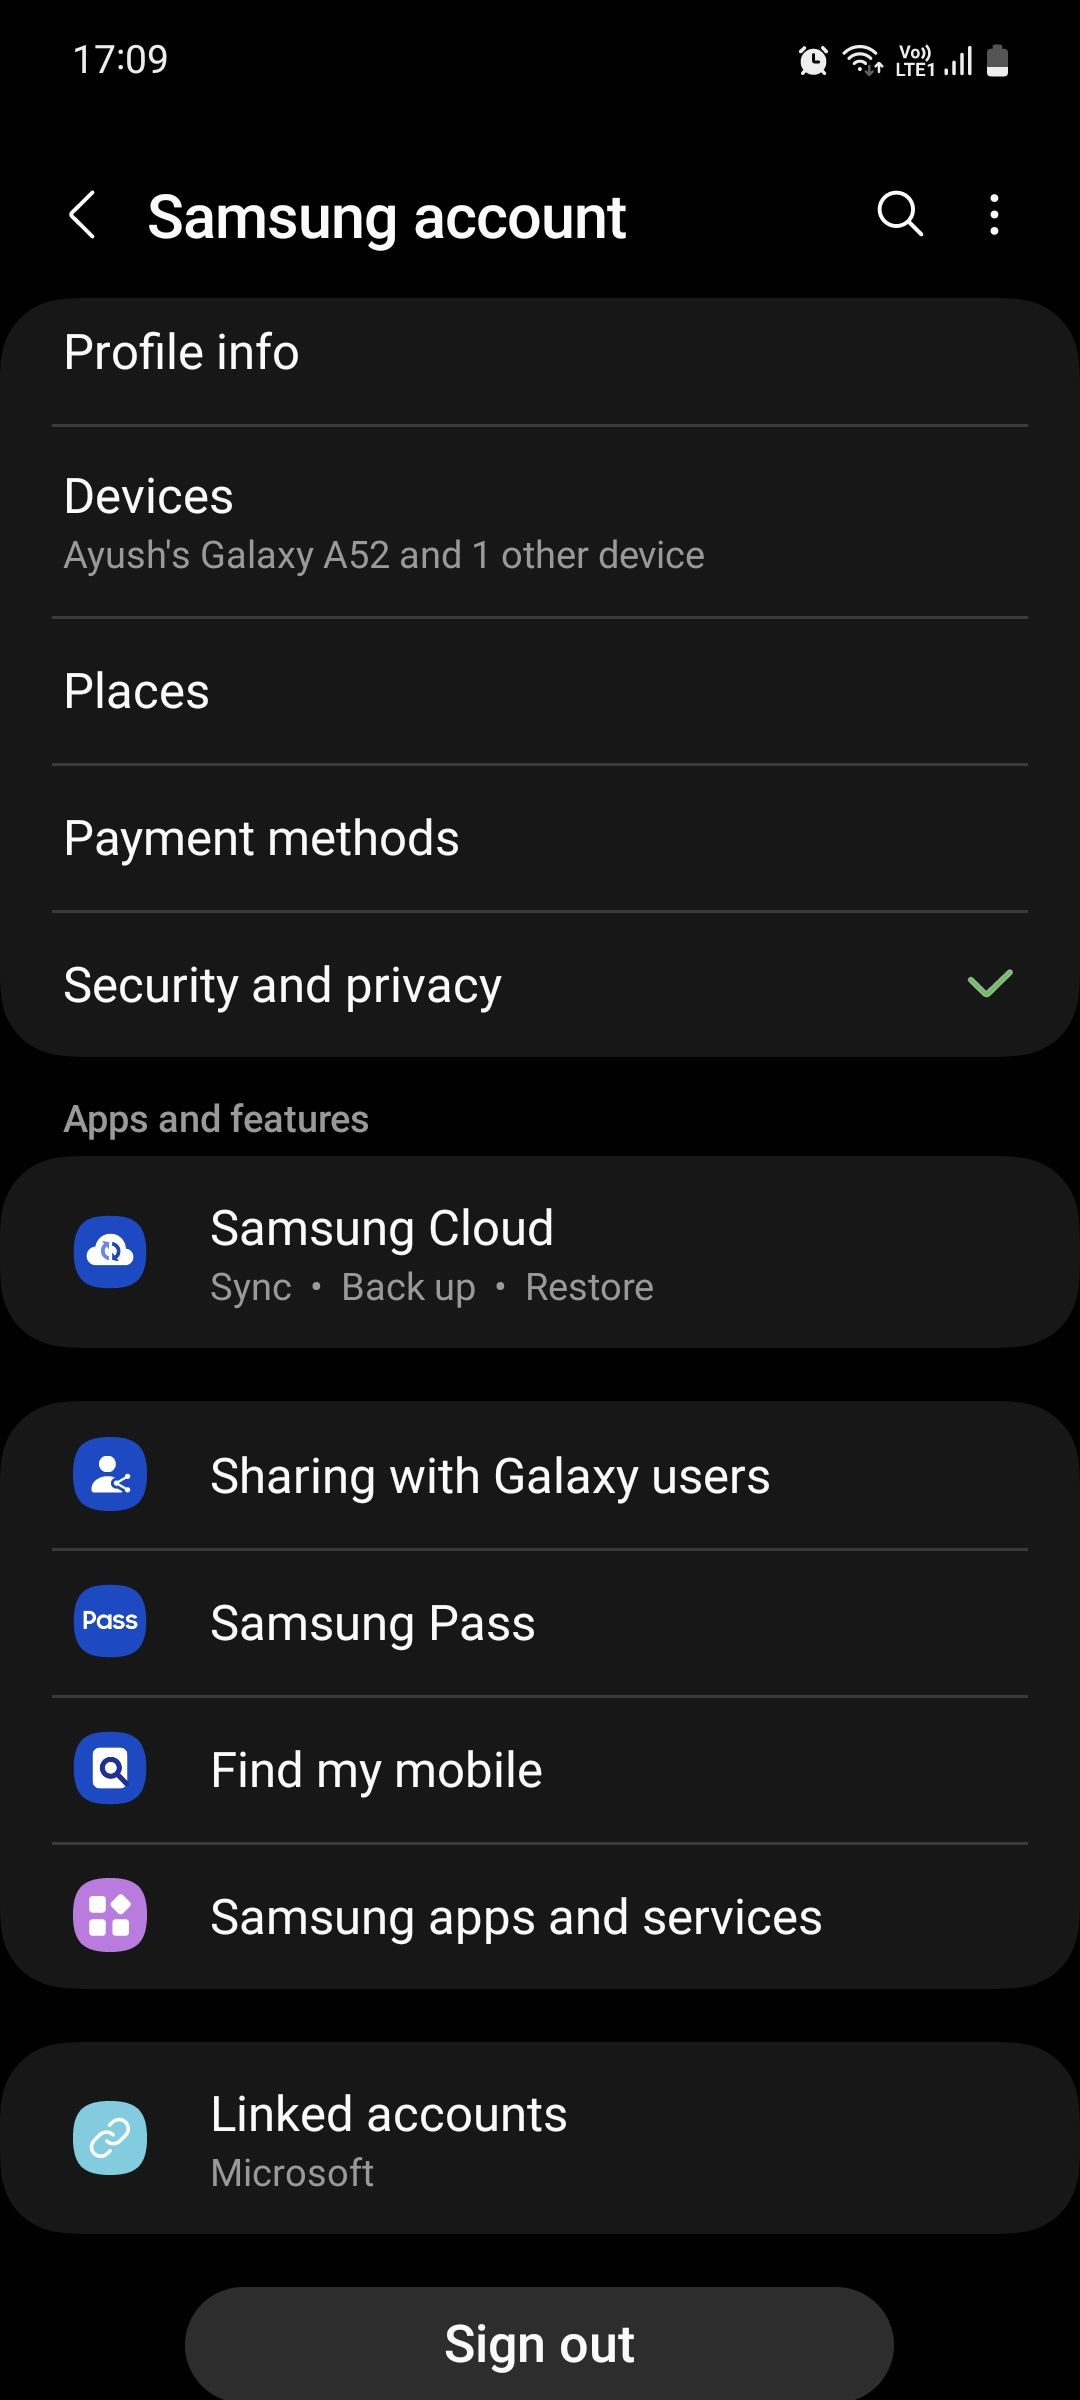 Samsung account menu